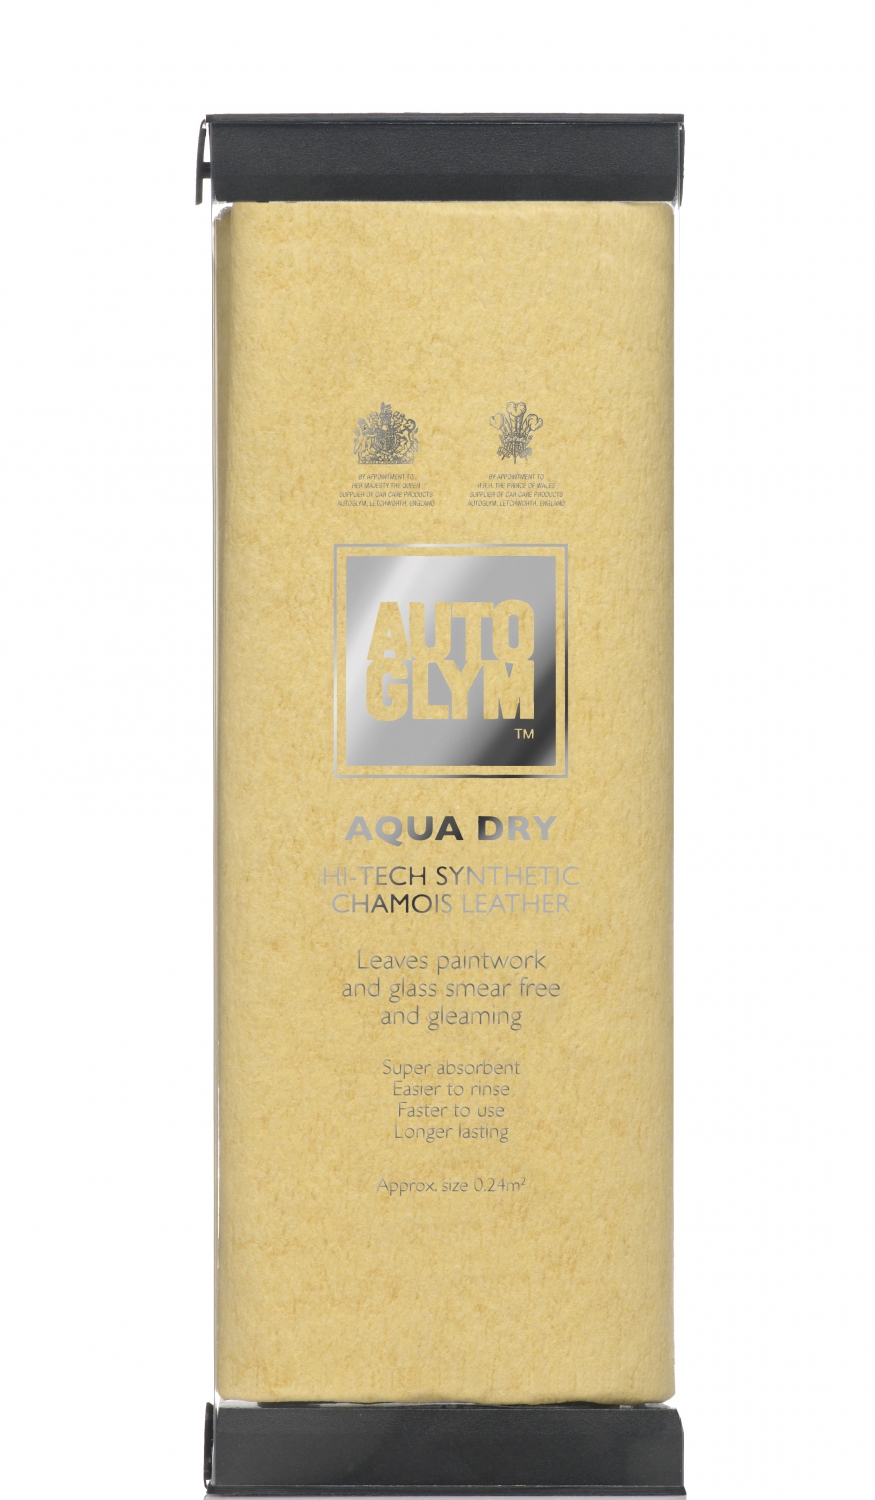 Køb Autoglym Vaskeskind - Aqua Dry - Pris 189.00 kr.